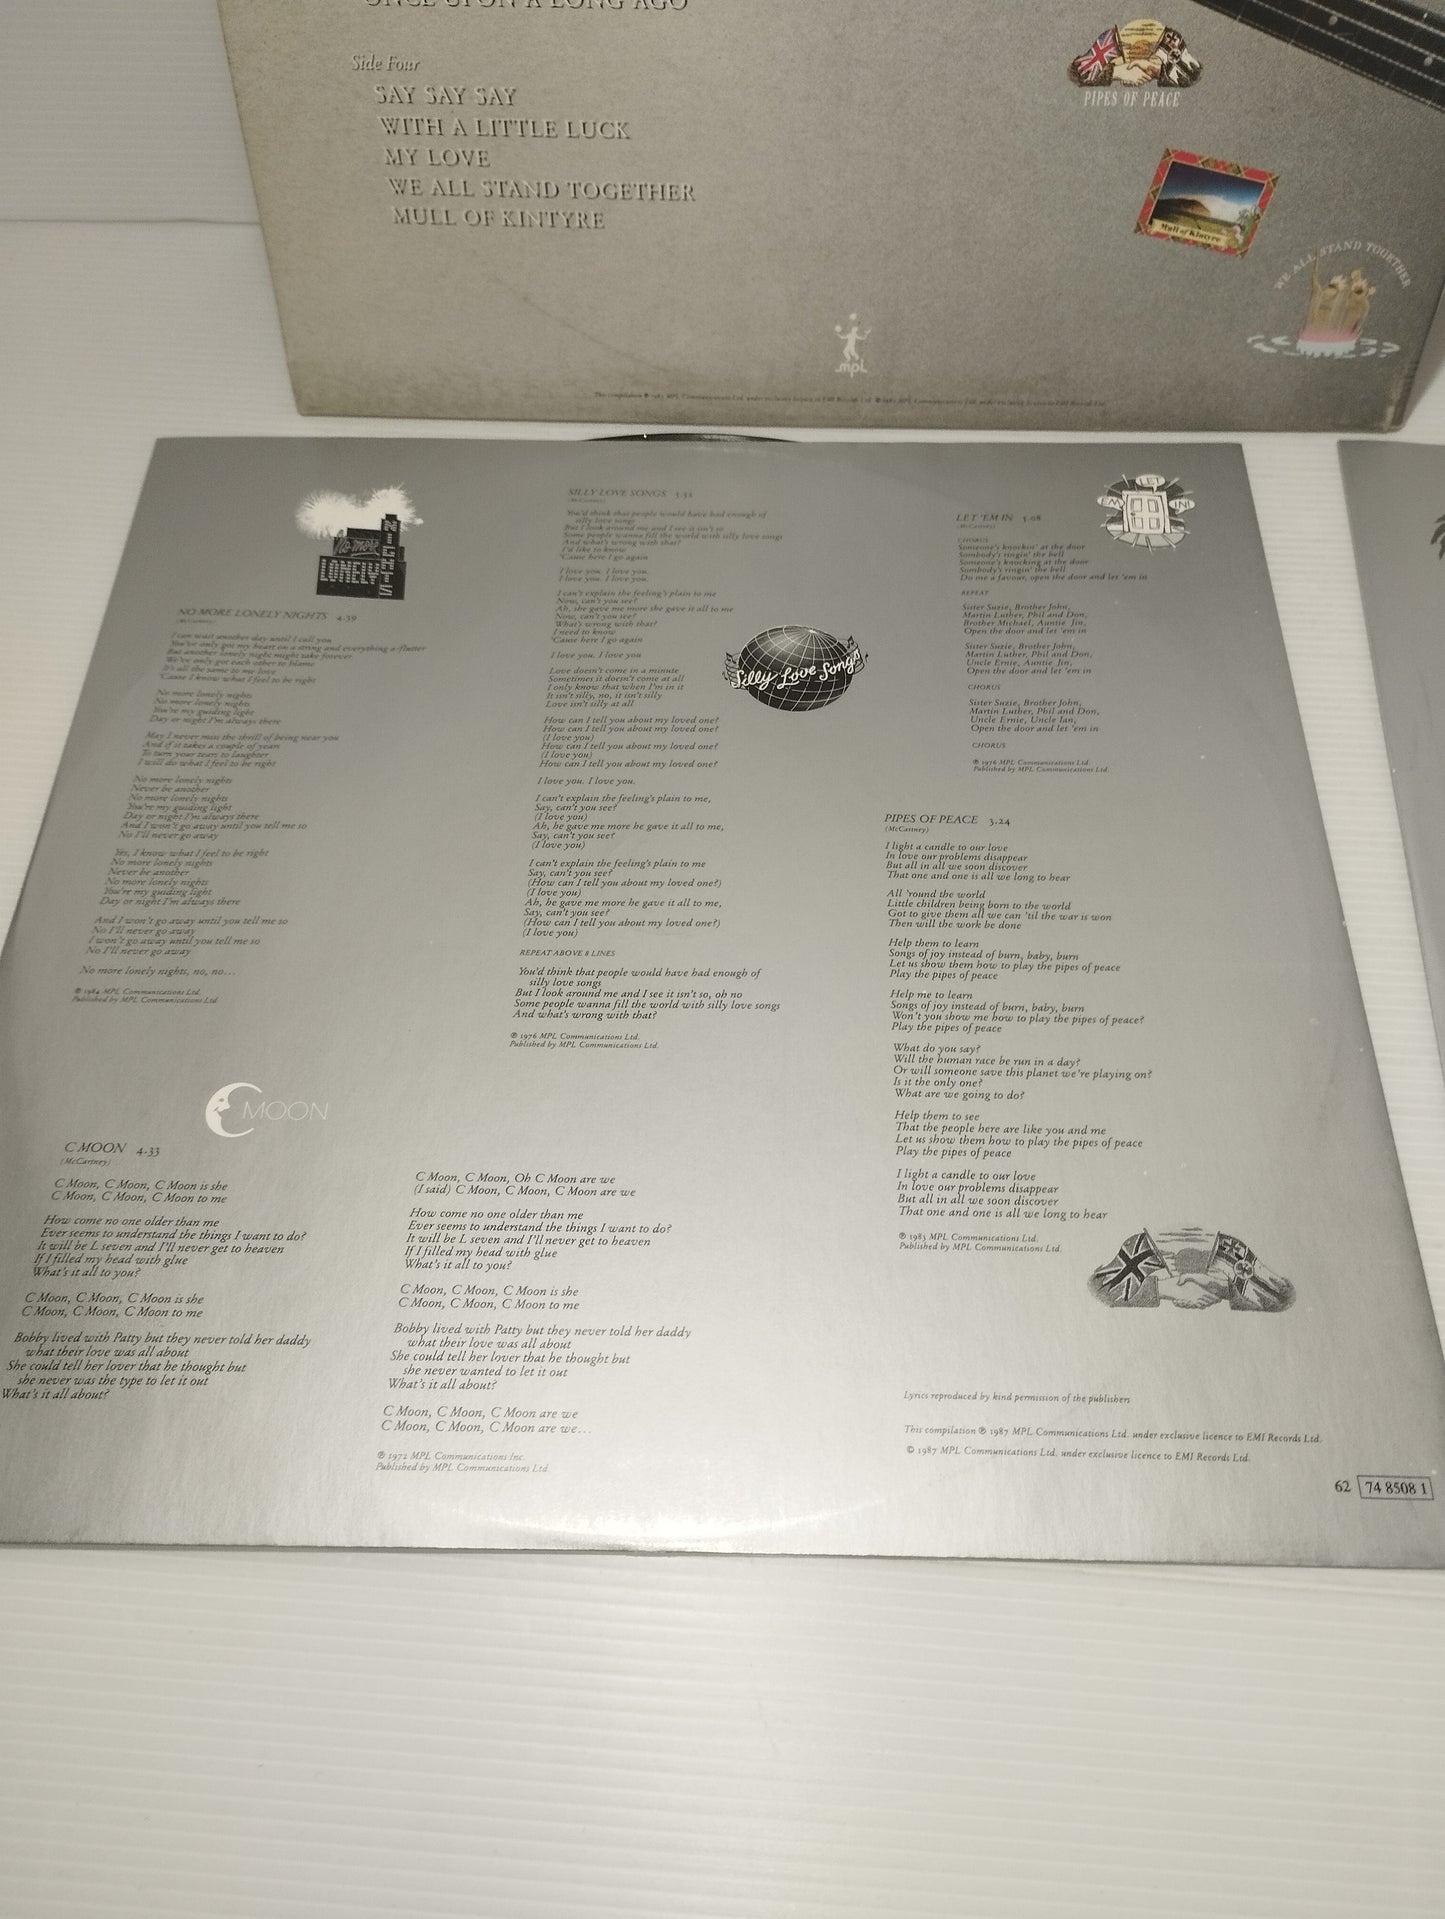 All the best Paul MC Cartney 2 LP 33 Giri
Etichetta MPL EMI cod.2-62 74 8507 1